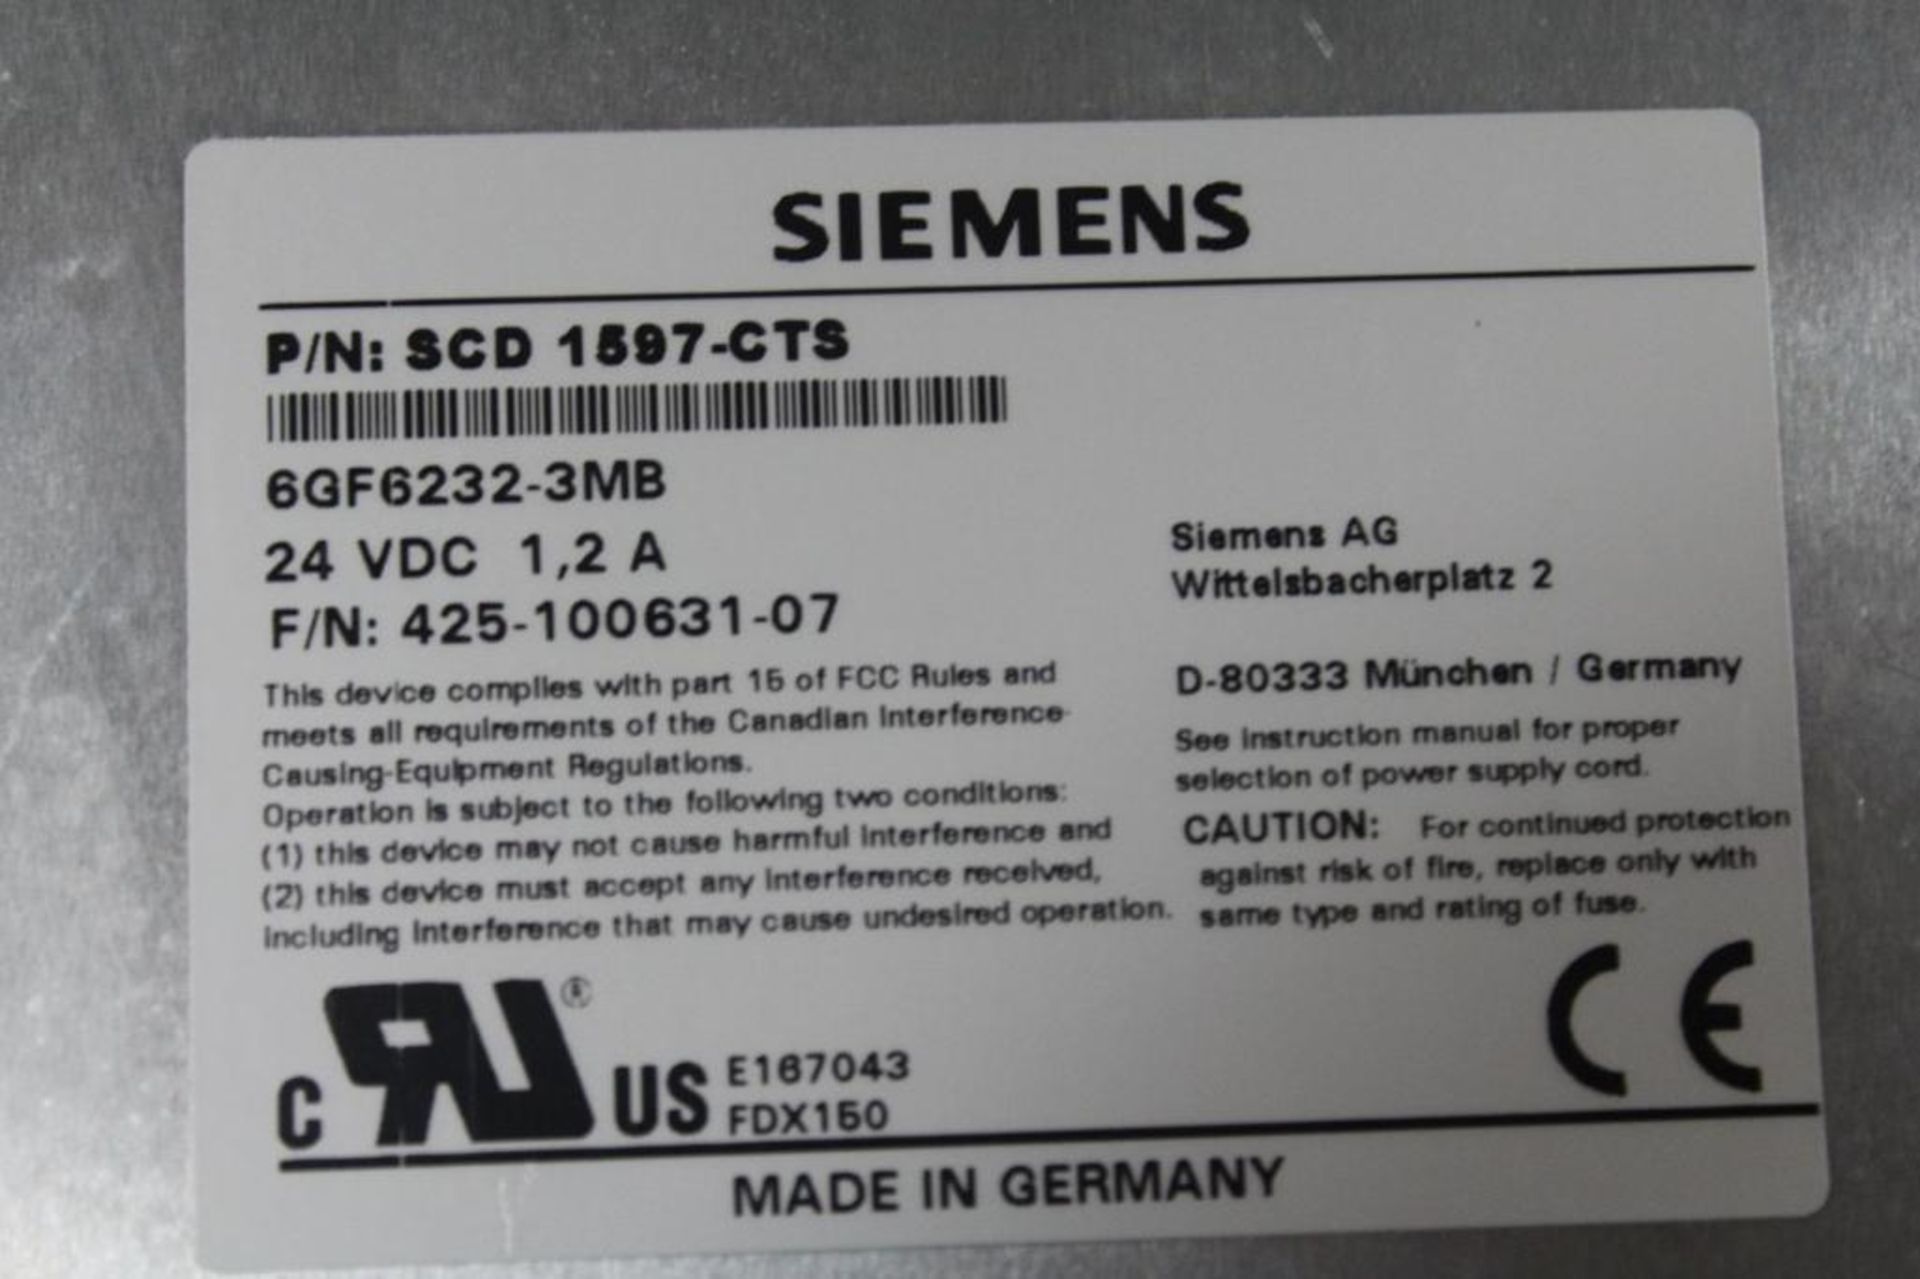 Siemens SCD 1597-CTS Panel 6GF6232-3MB - Image 2 of 2